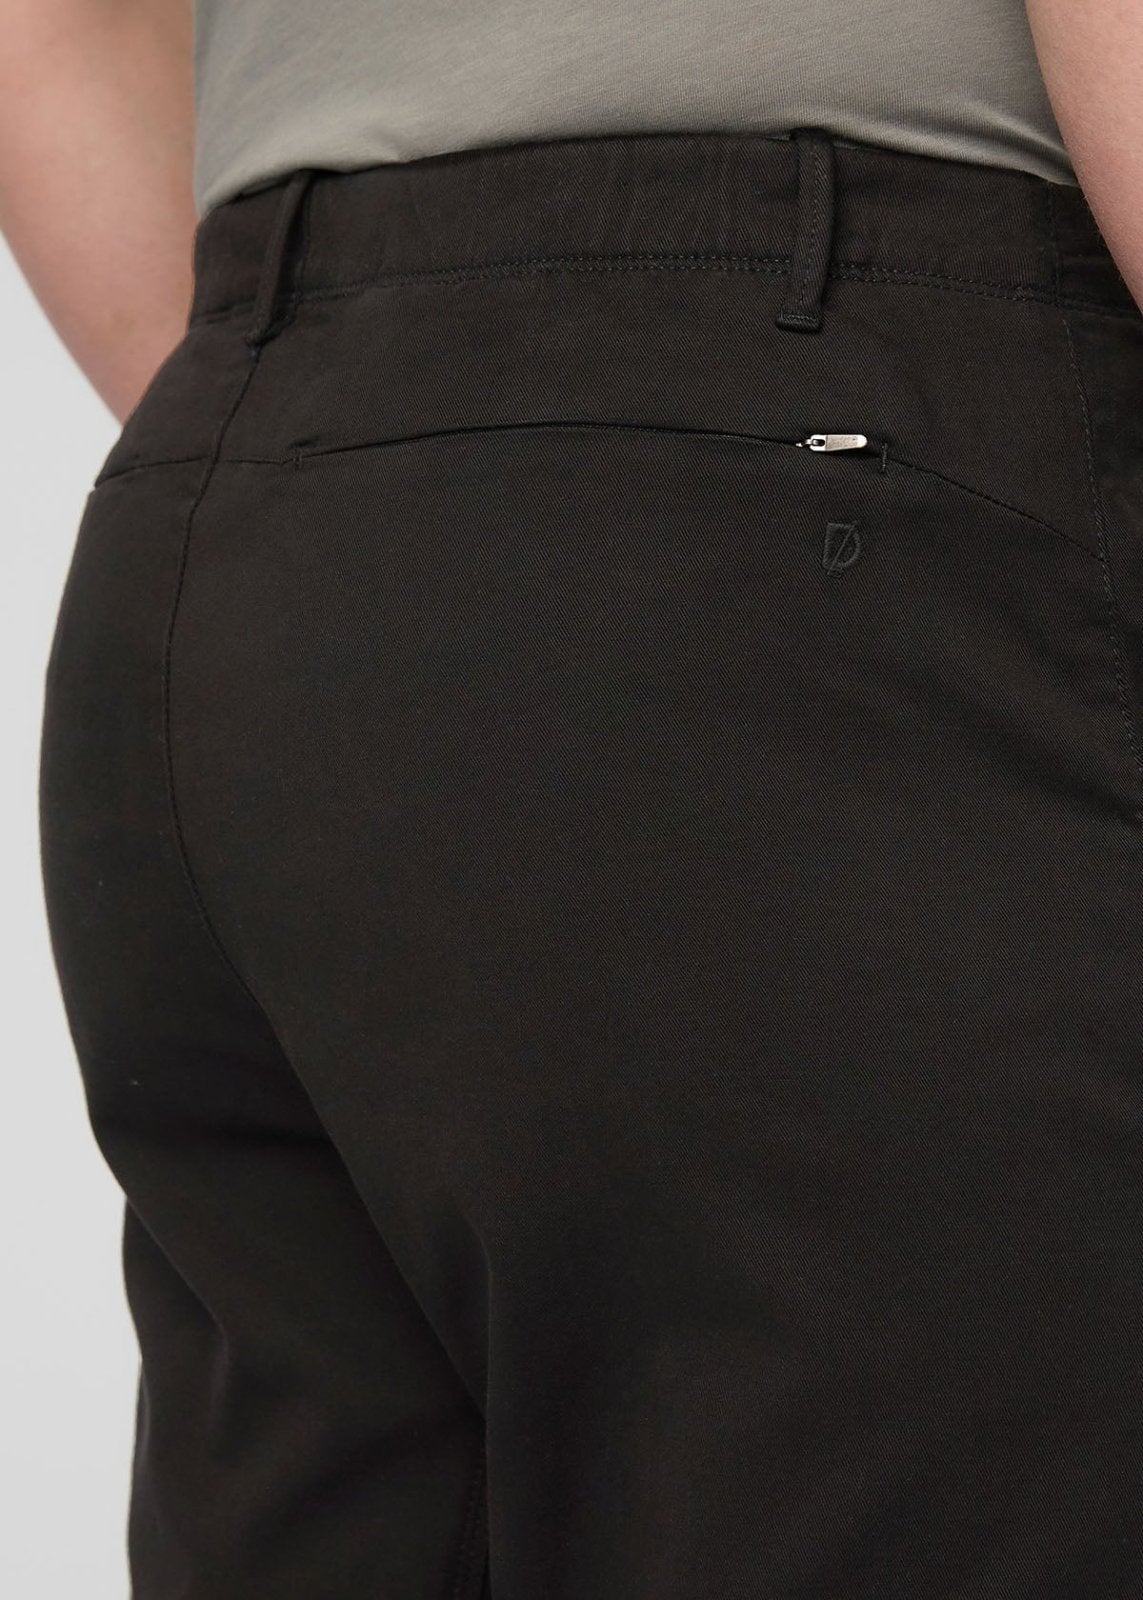 mens stretch black chino pants back zip pocket closed